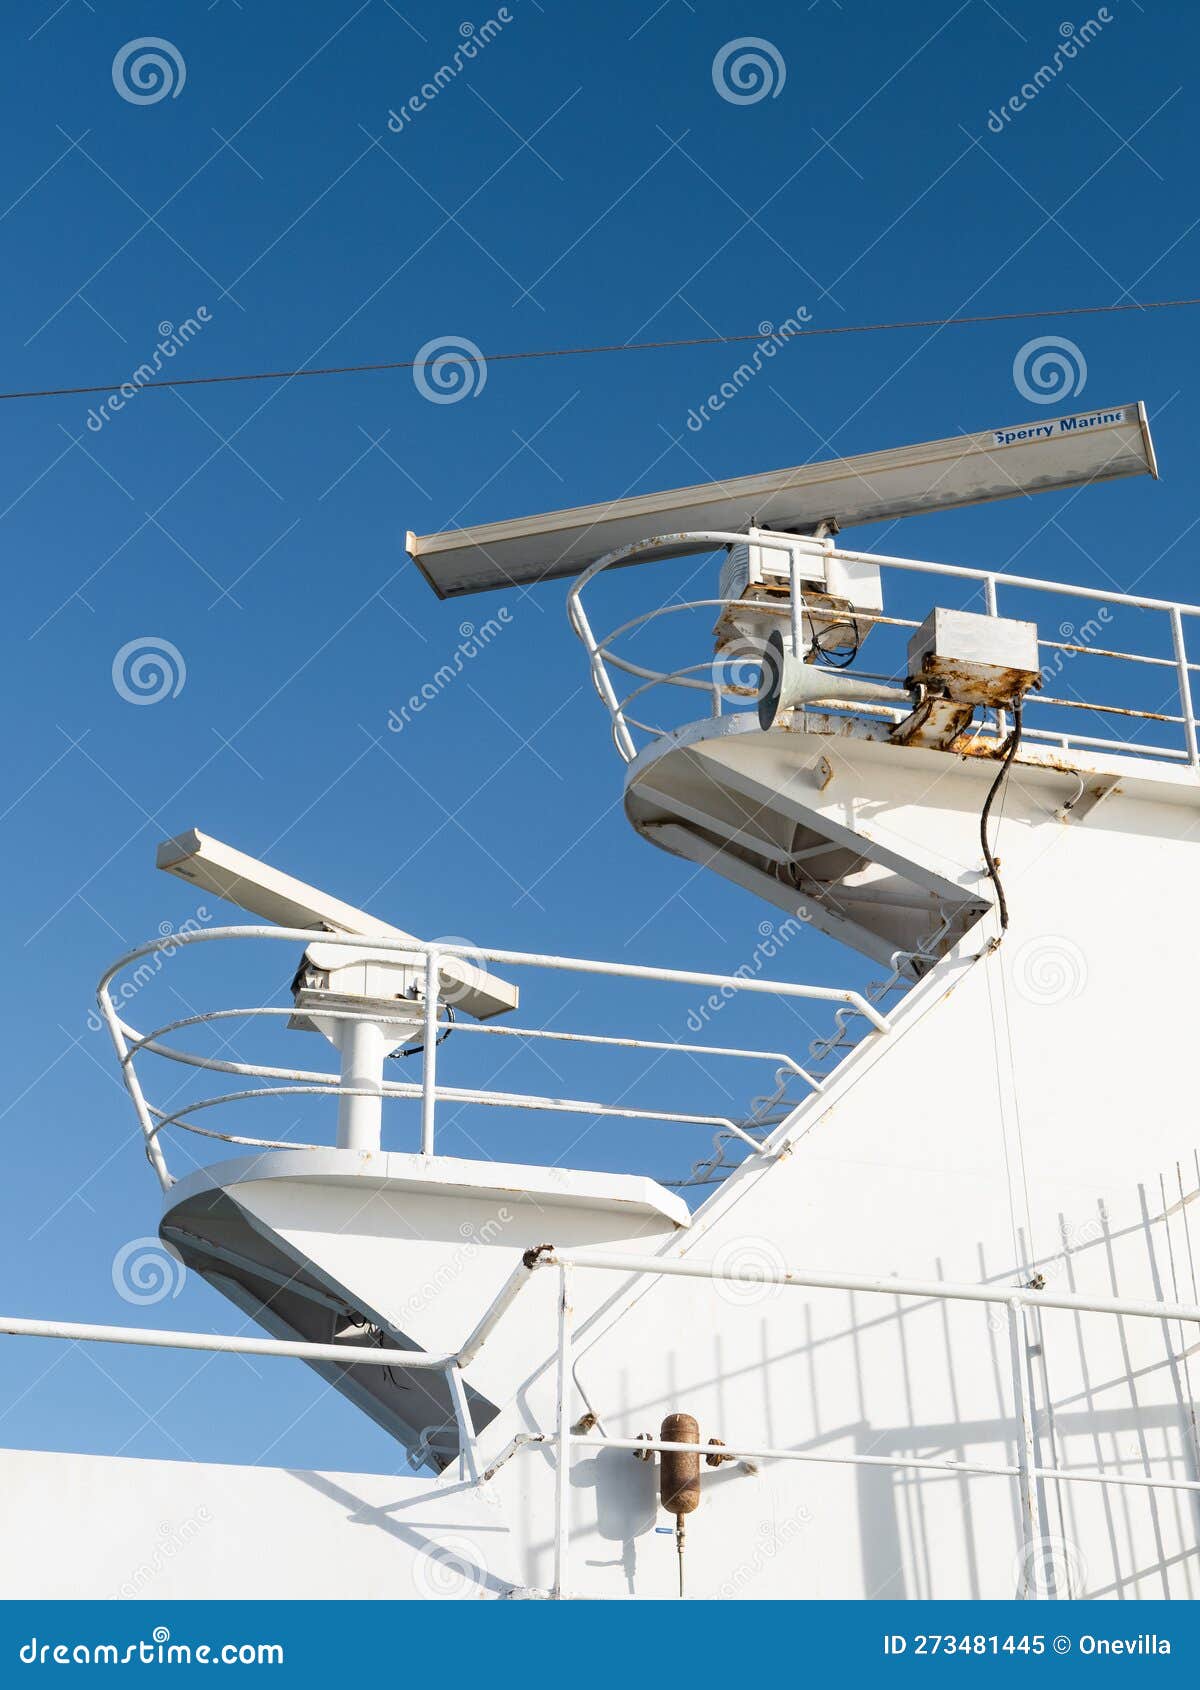 Sperry Marine Radar Antenna on Armas Ferry Editorial Image - Image of  conditions, vessel: 273481445